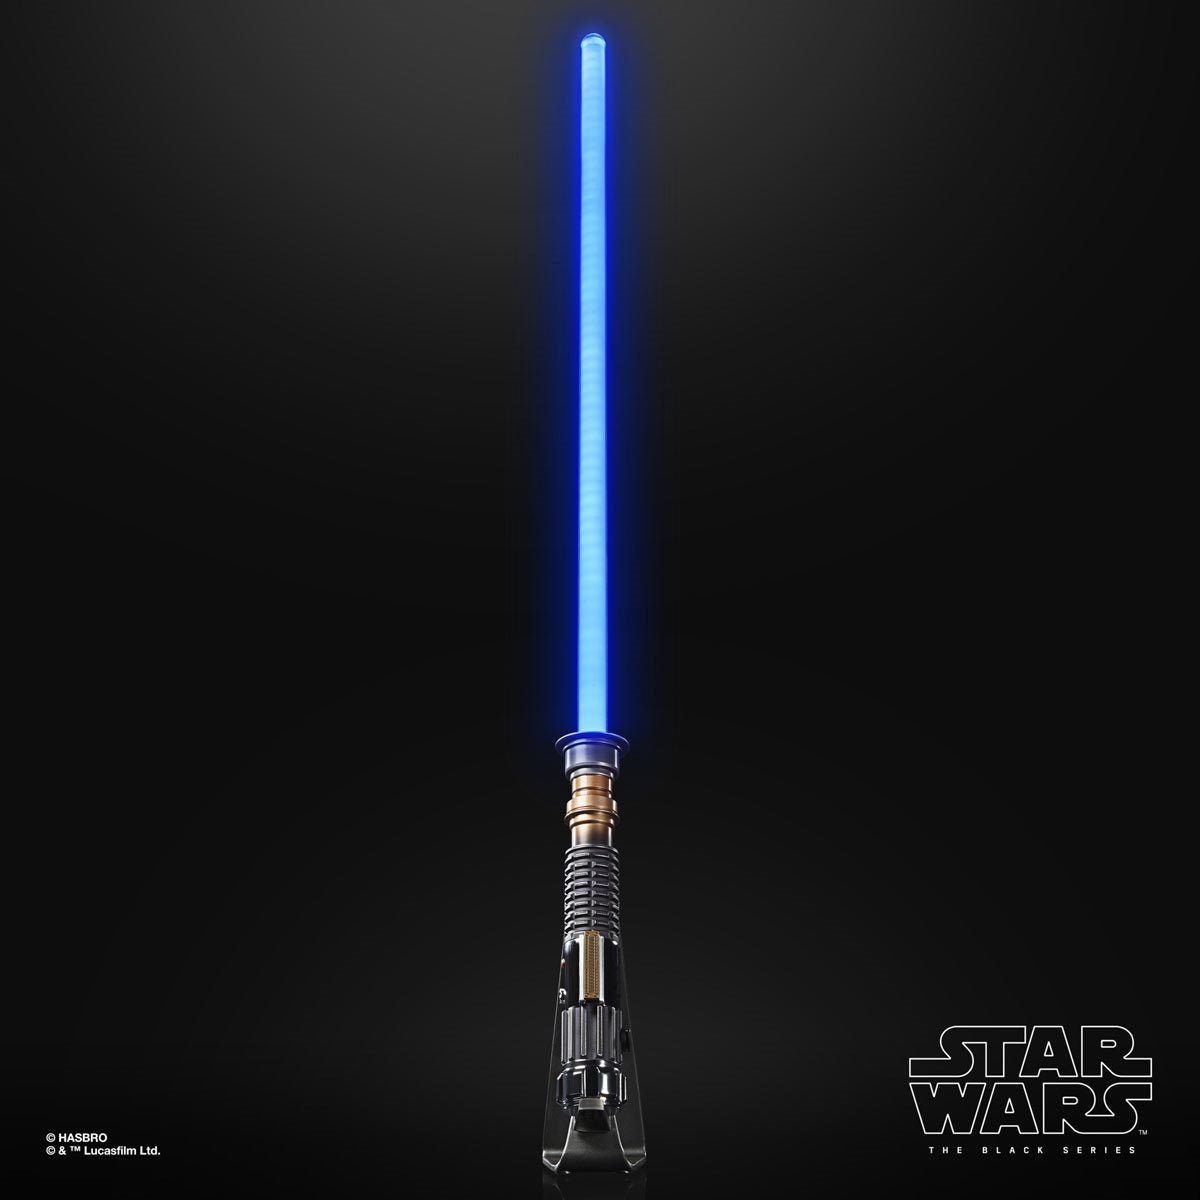 Star Wars The Black Series Elite Obi-Wan Kenobi Force FX Lightsaber Prop Replica - The Fourth Place